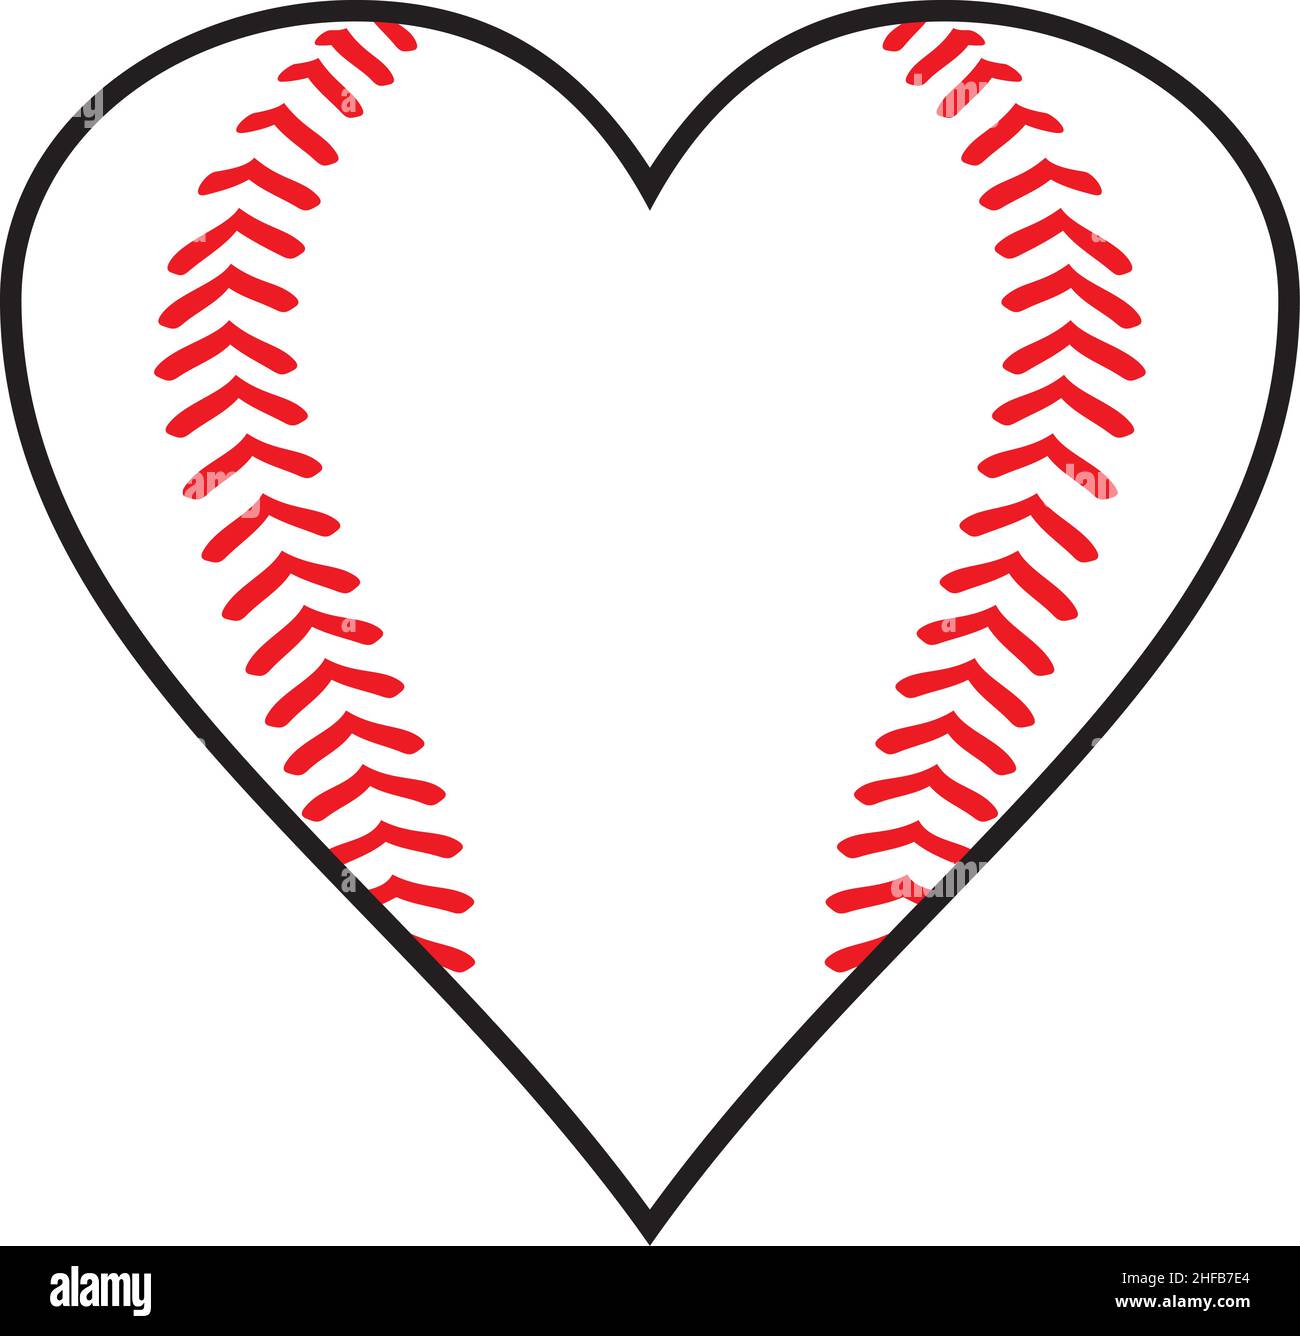 Baseball Heart Design Vector Illustration Stock Vector Image Art Alamy